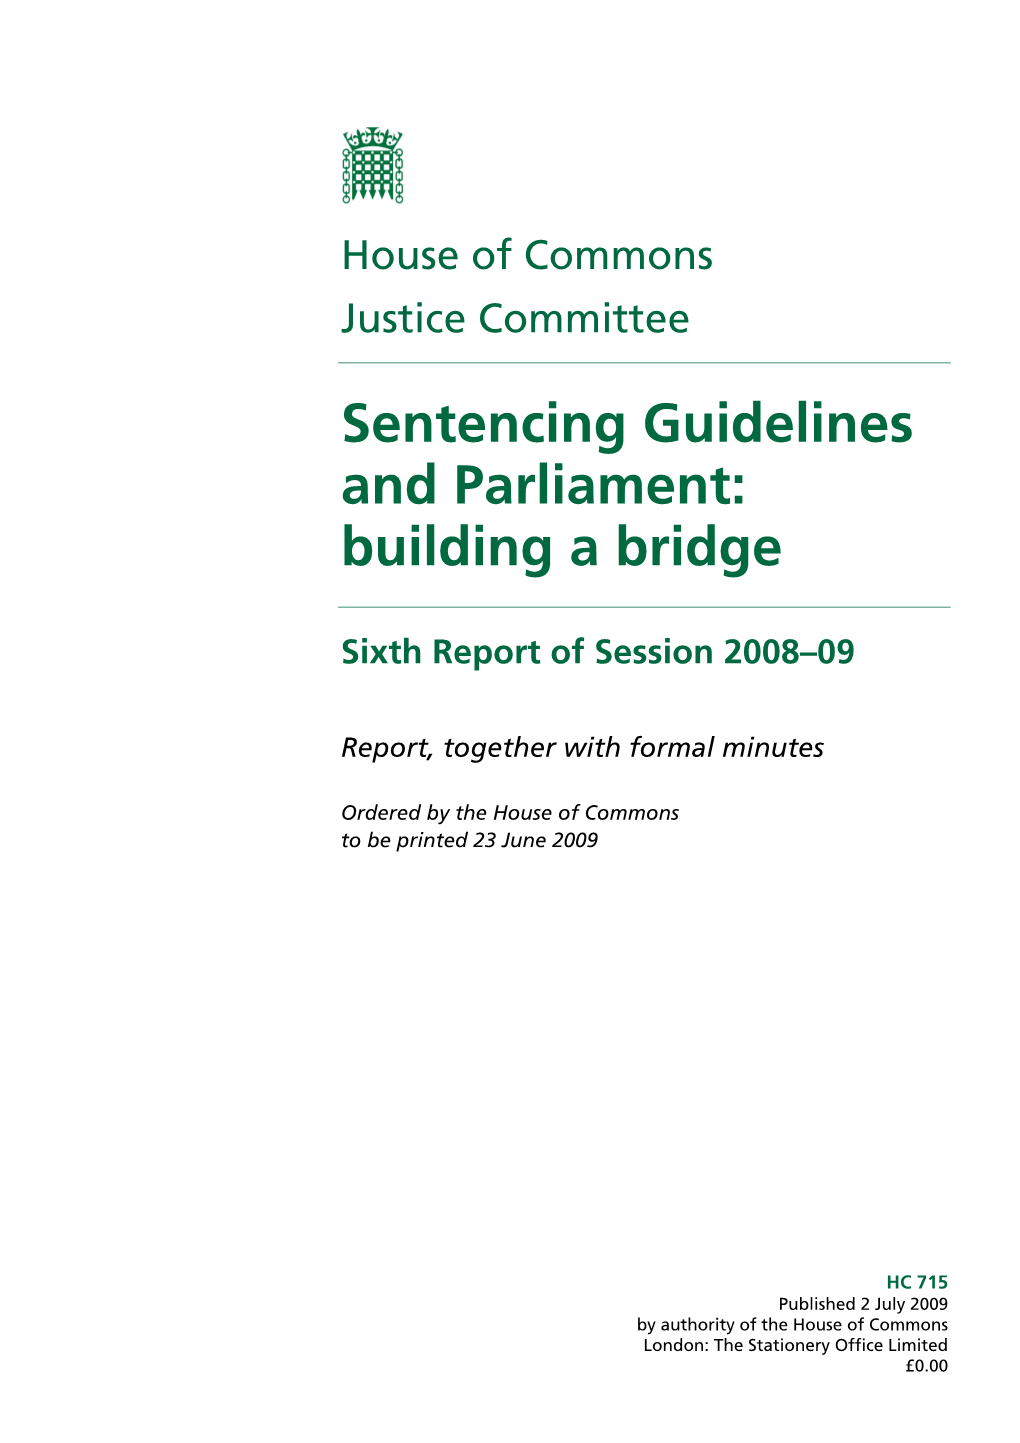 Sentencing Guidelines and Parliament: Building a Bridge